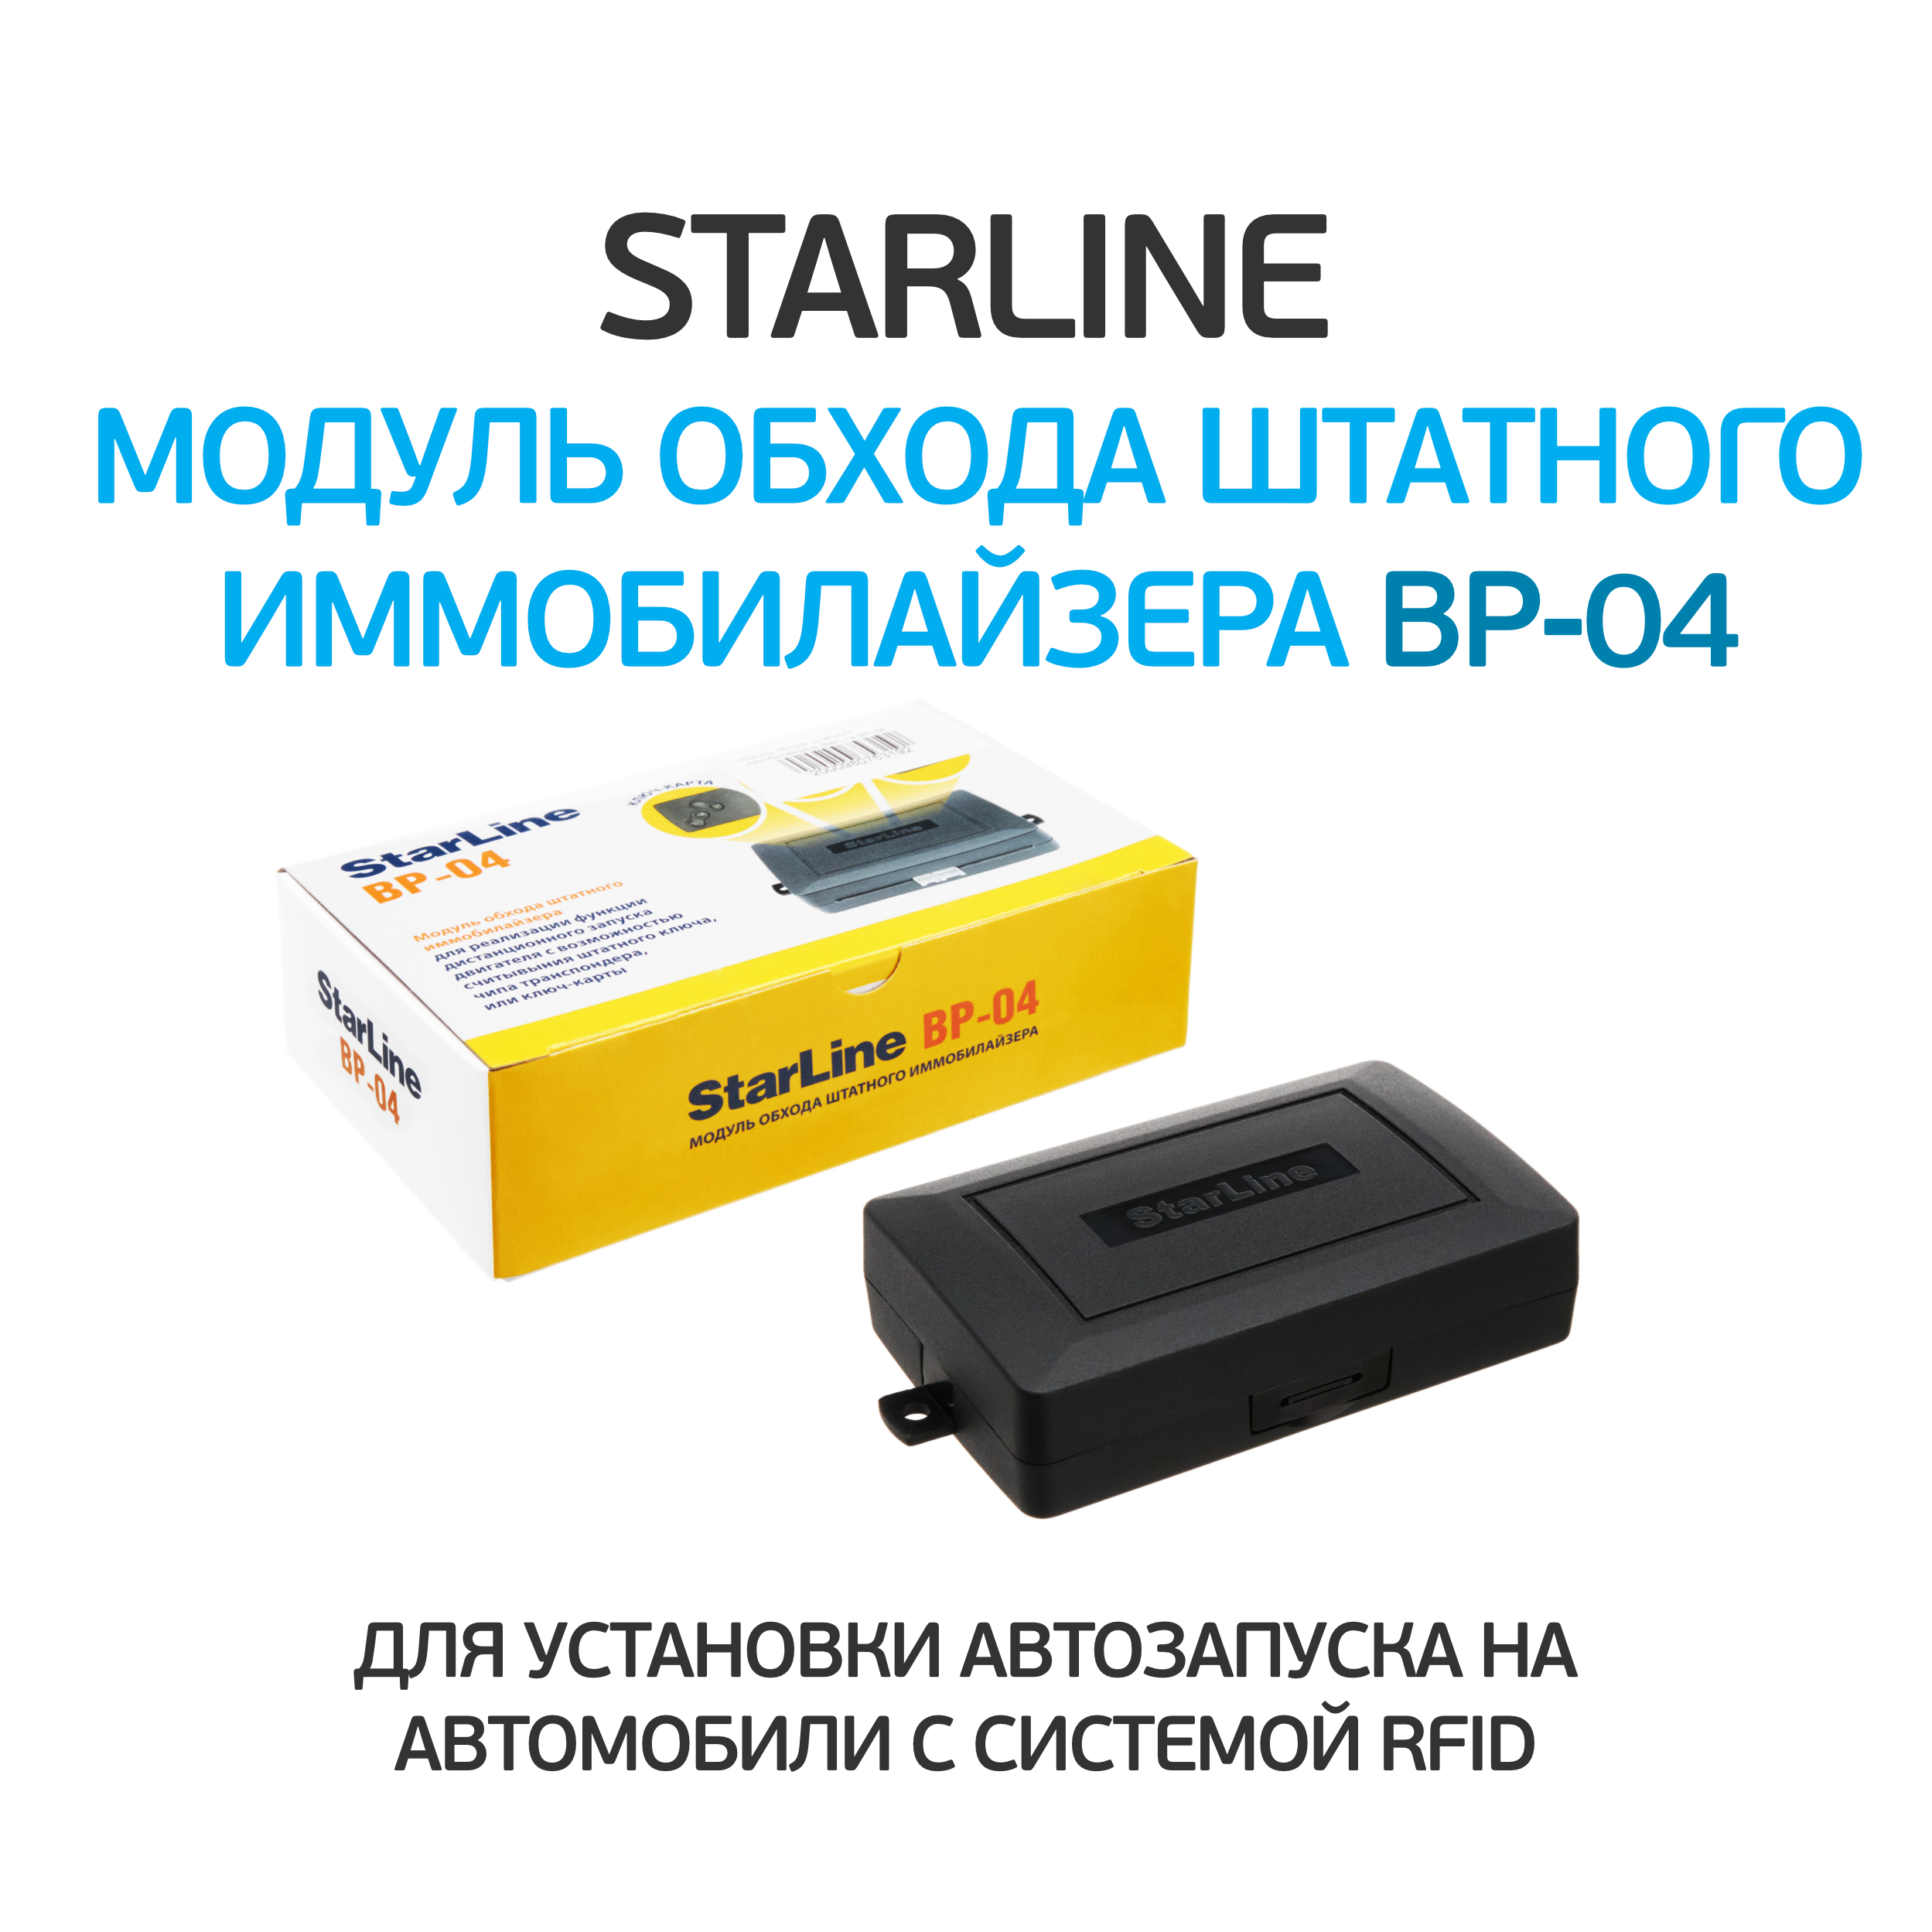 Обход иммобилайзера starline. Блок обхода иммобилайзера STARLINE a93. Модуль обхода иммобилайзера STARLINE BP-03. Модуль обхода штатного иммобилайзера STARLINE BP-03. Обходчик иммобилайзера STARLINE ВР-03.